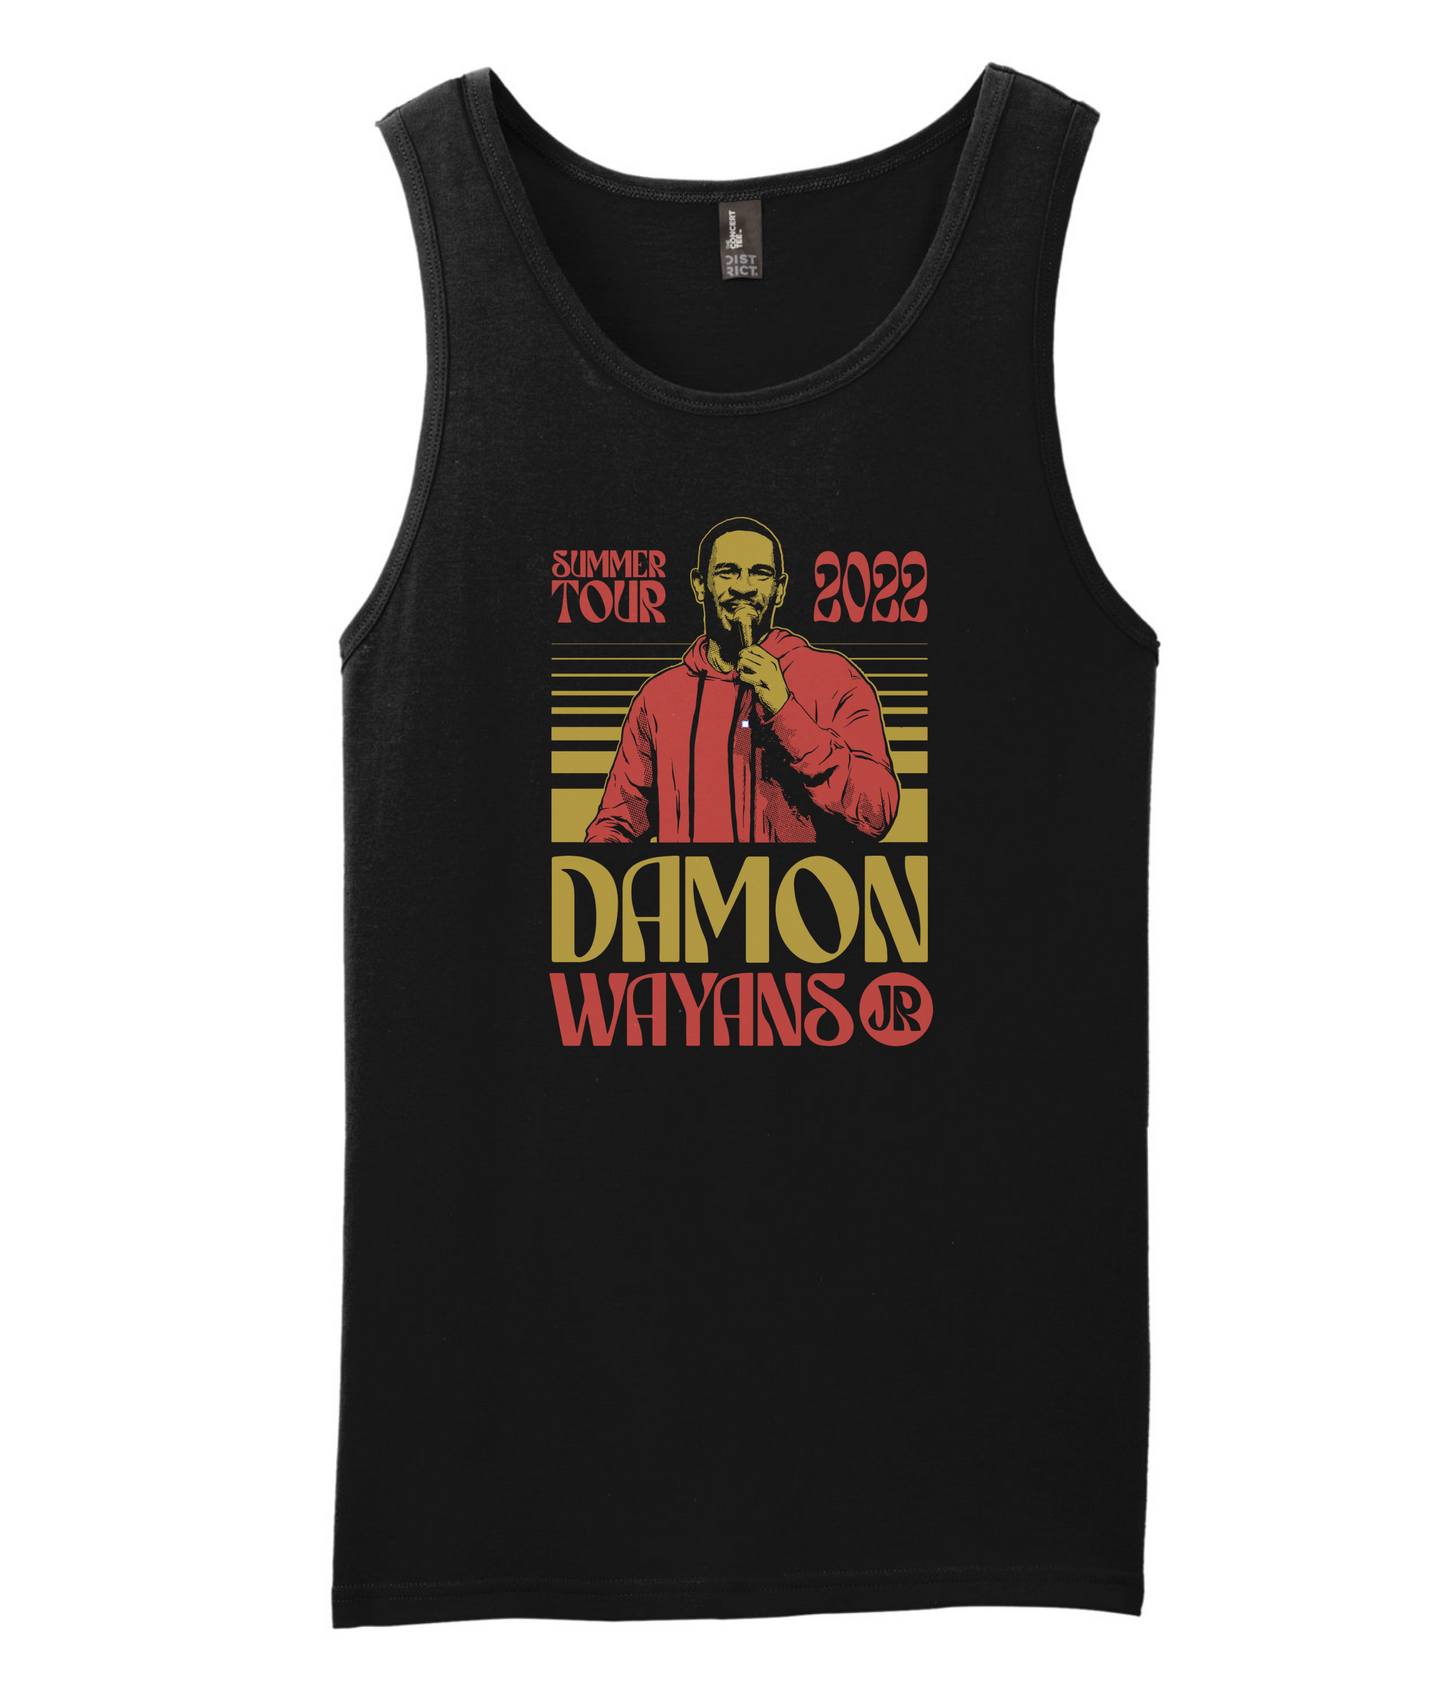 Damon Wayans Jr. - Summer Tour 2022 - Black Tank Top